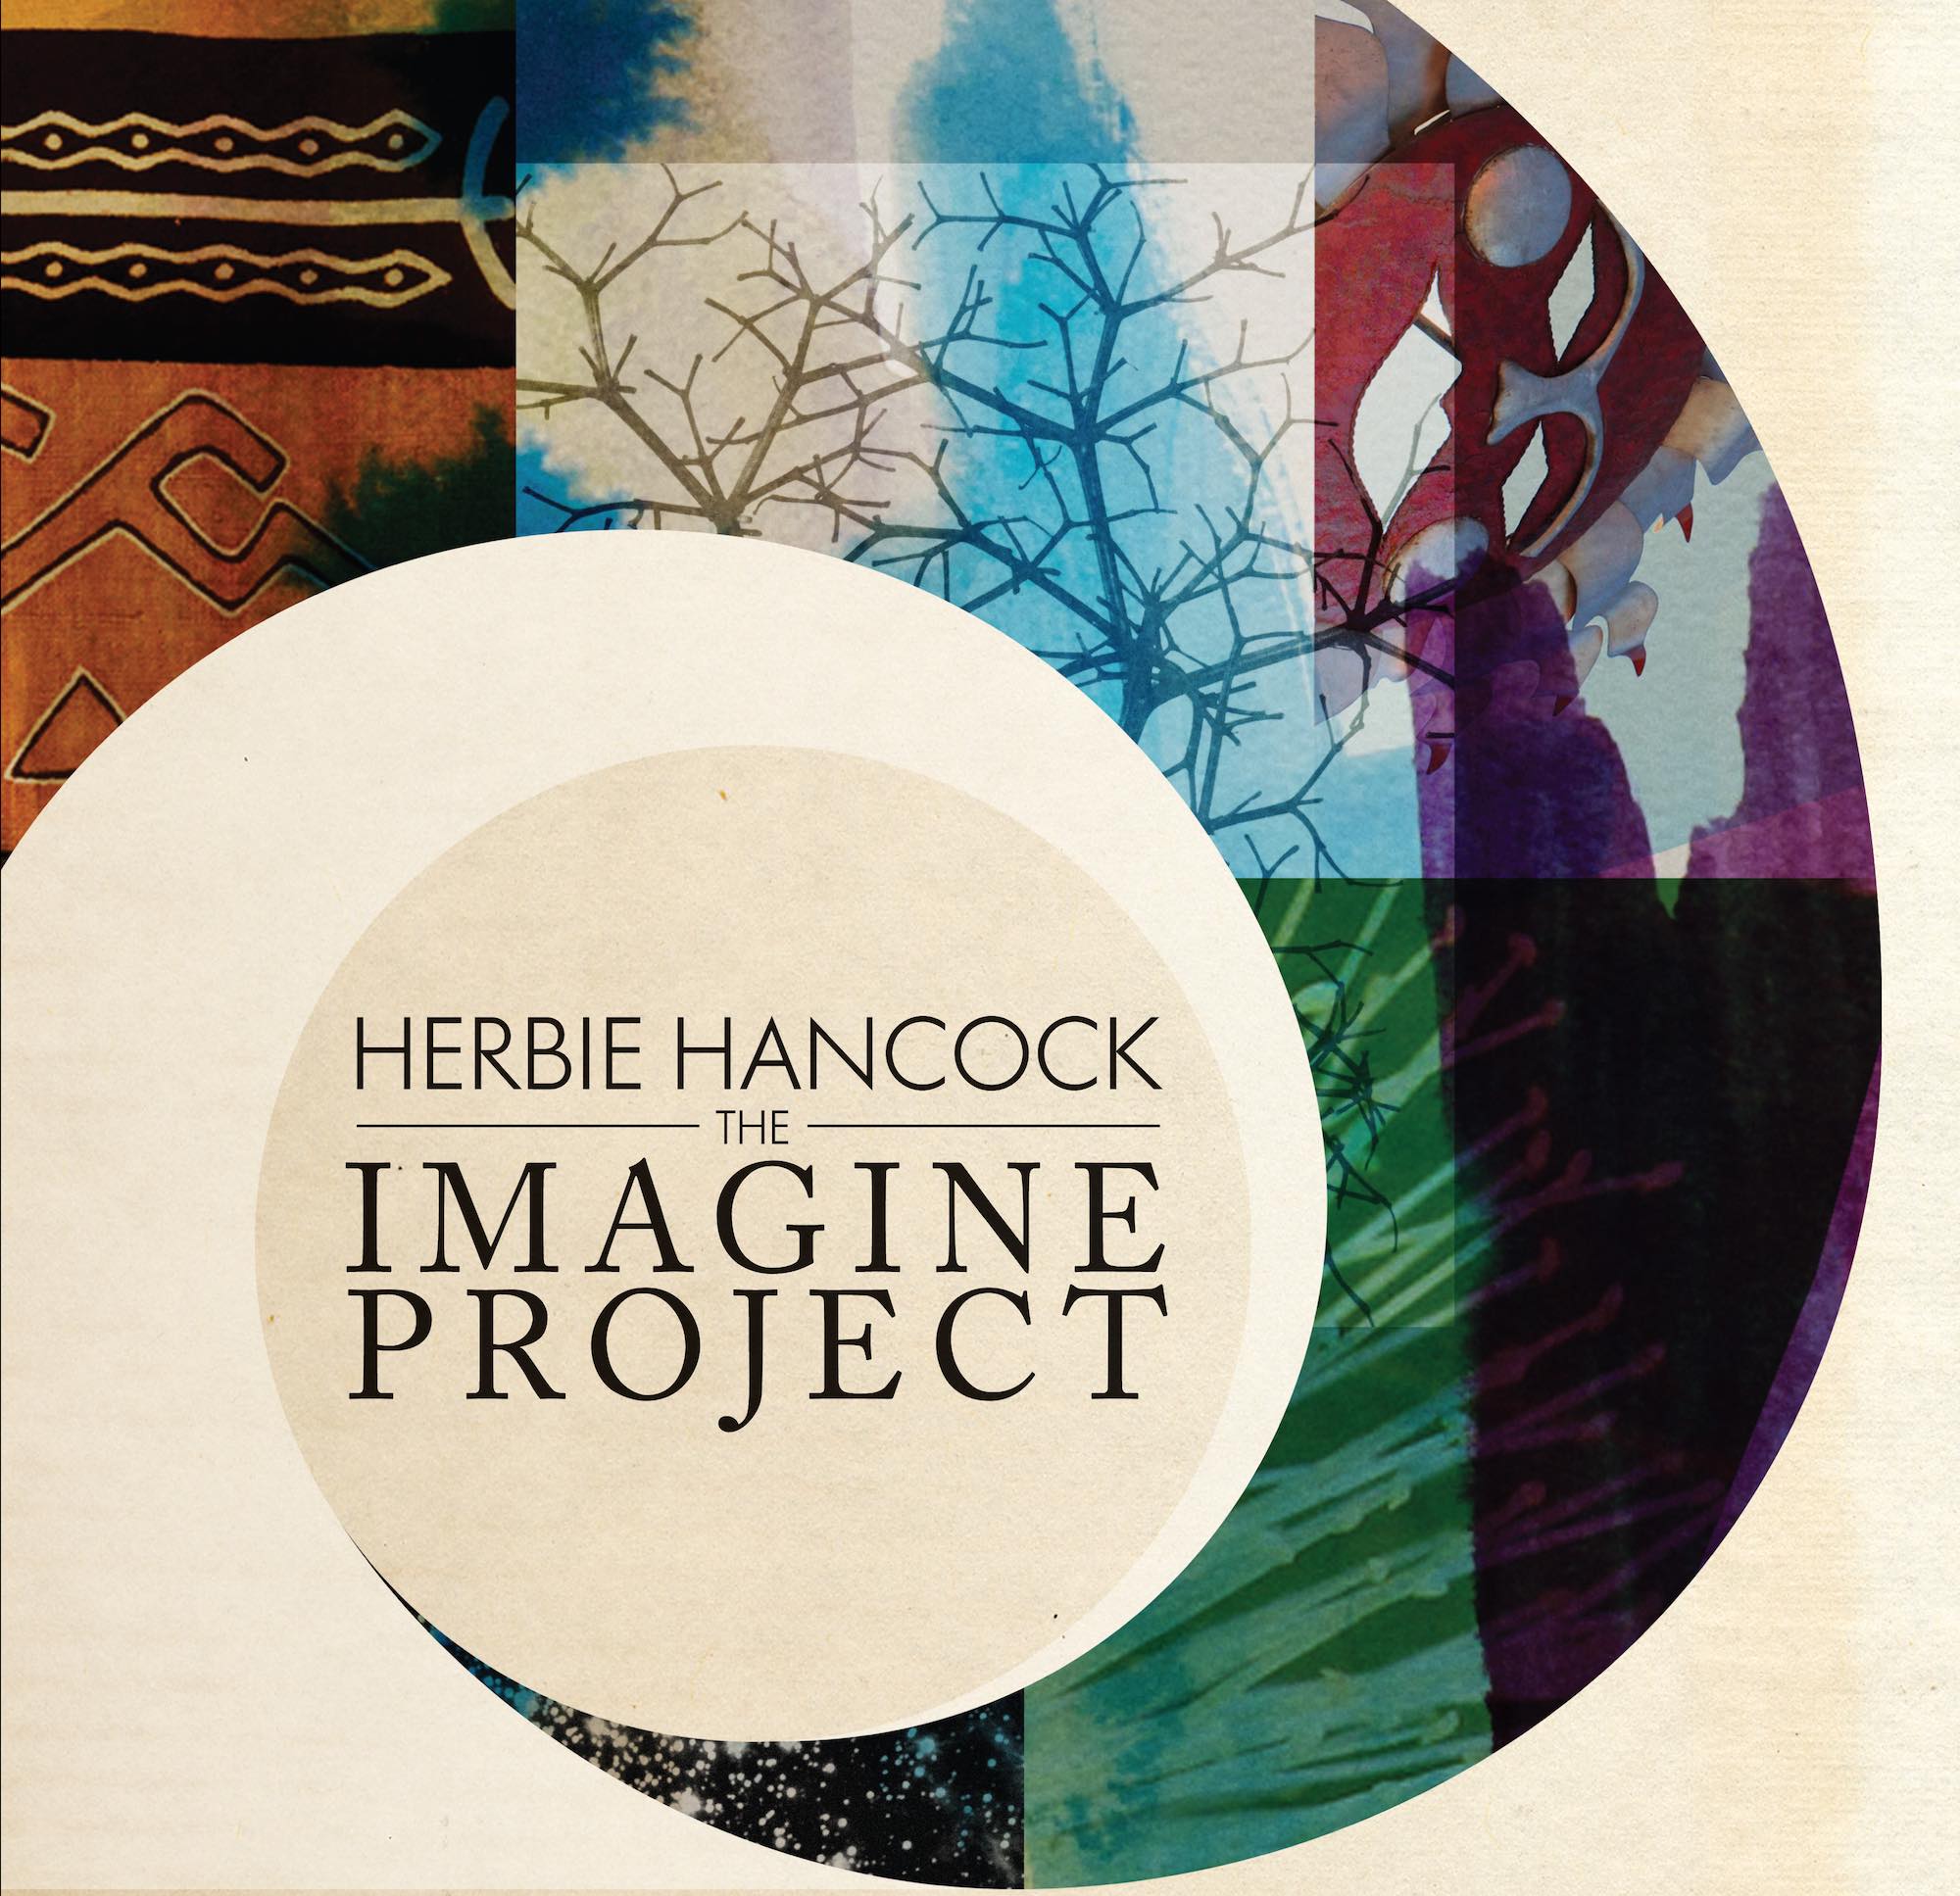 Herbie Hancock: Possibilities - WFMU - Magnolia Pictures